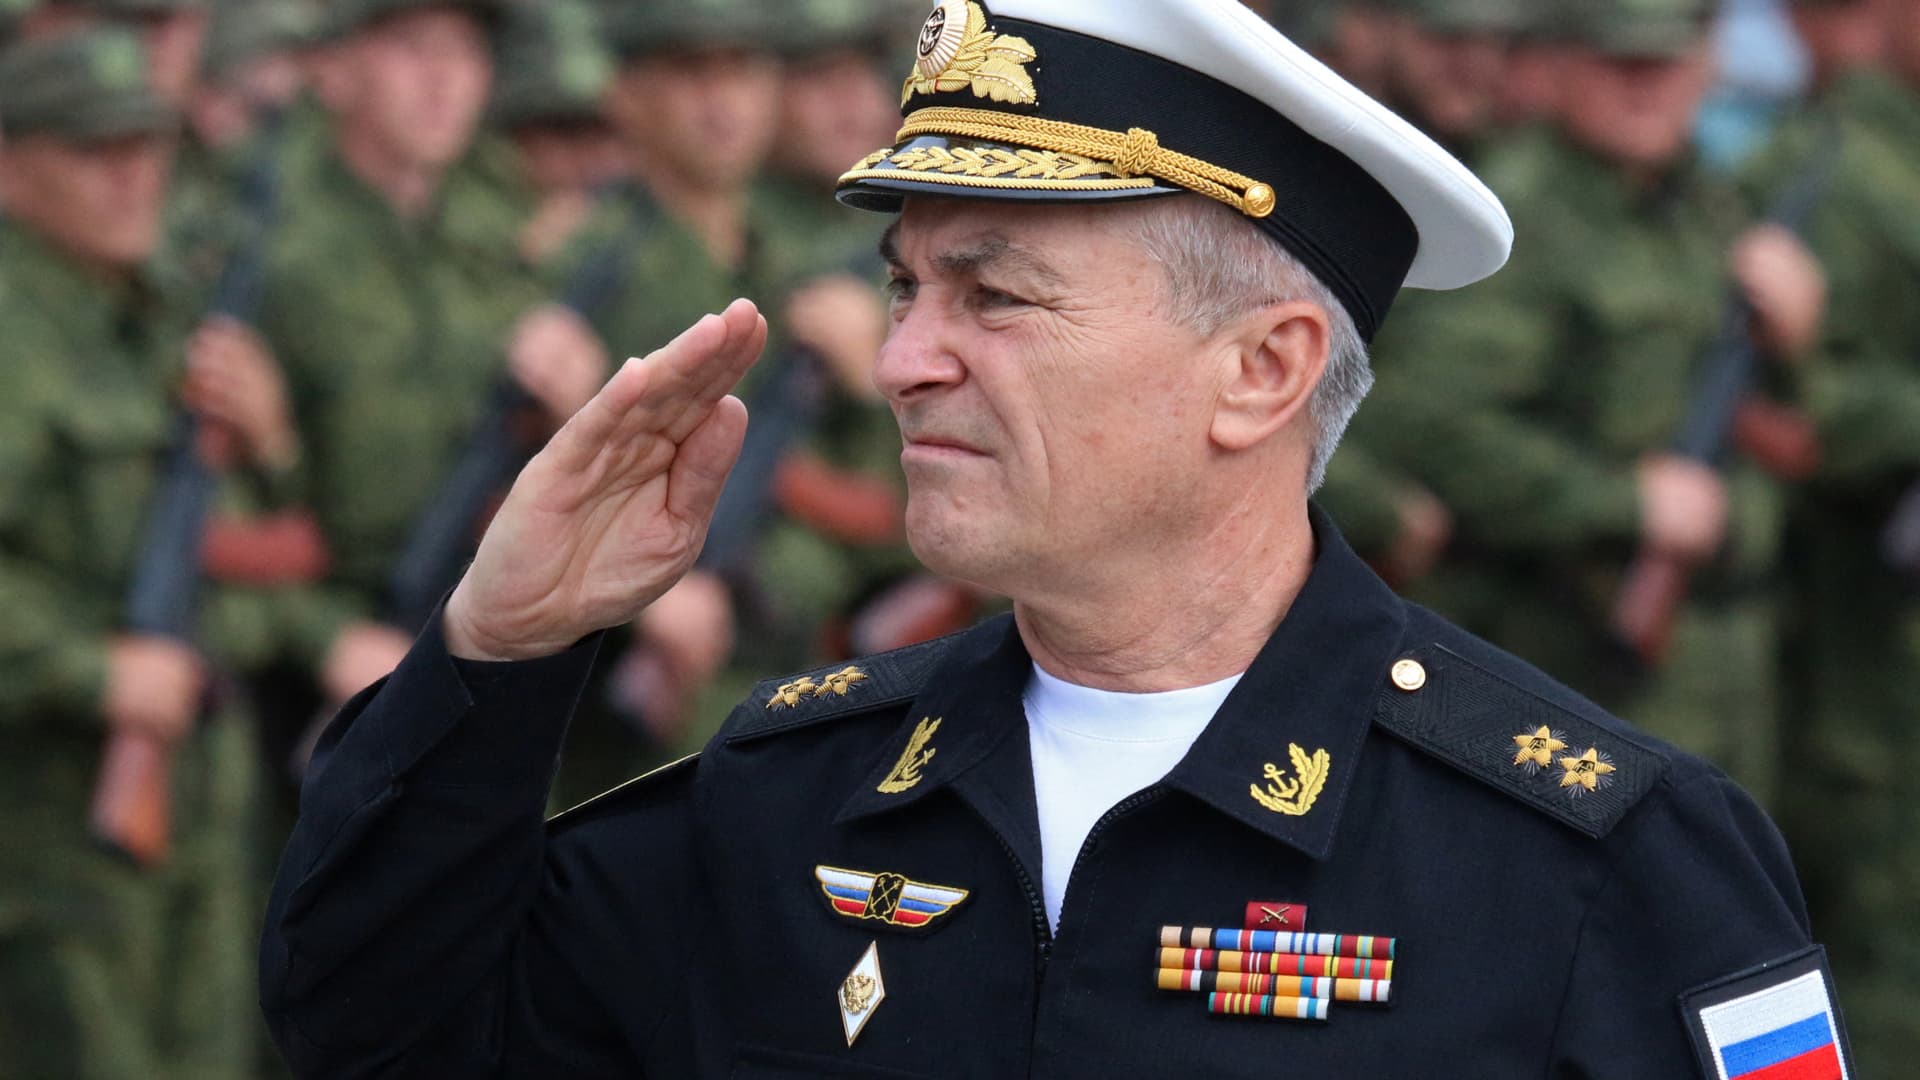 Viktor Sokolov attends a ceremony marking the 240th anniversary of Russia's Black Sea Fleet in Sevastopol, Crimea, on May 13, 2023.